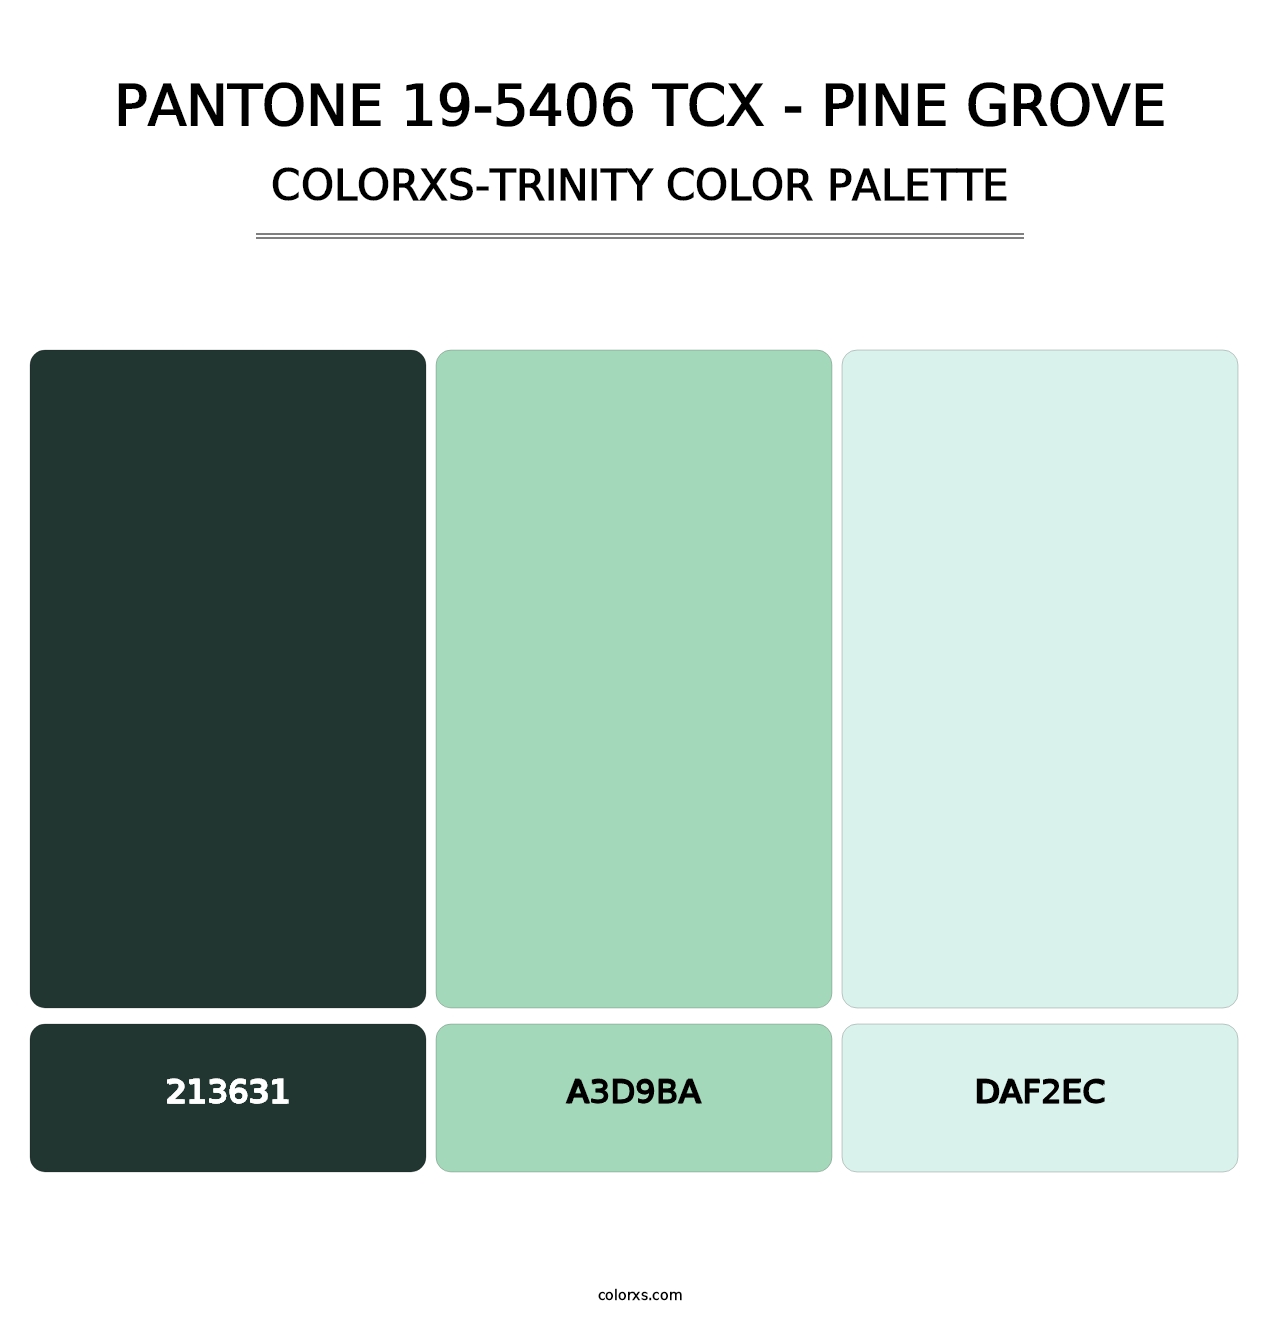 PANTONE 19-5406 TCX - Pine Grove - Colorxs Trinity Palette